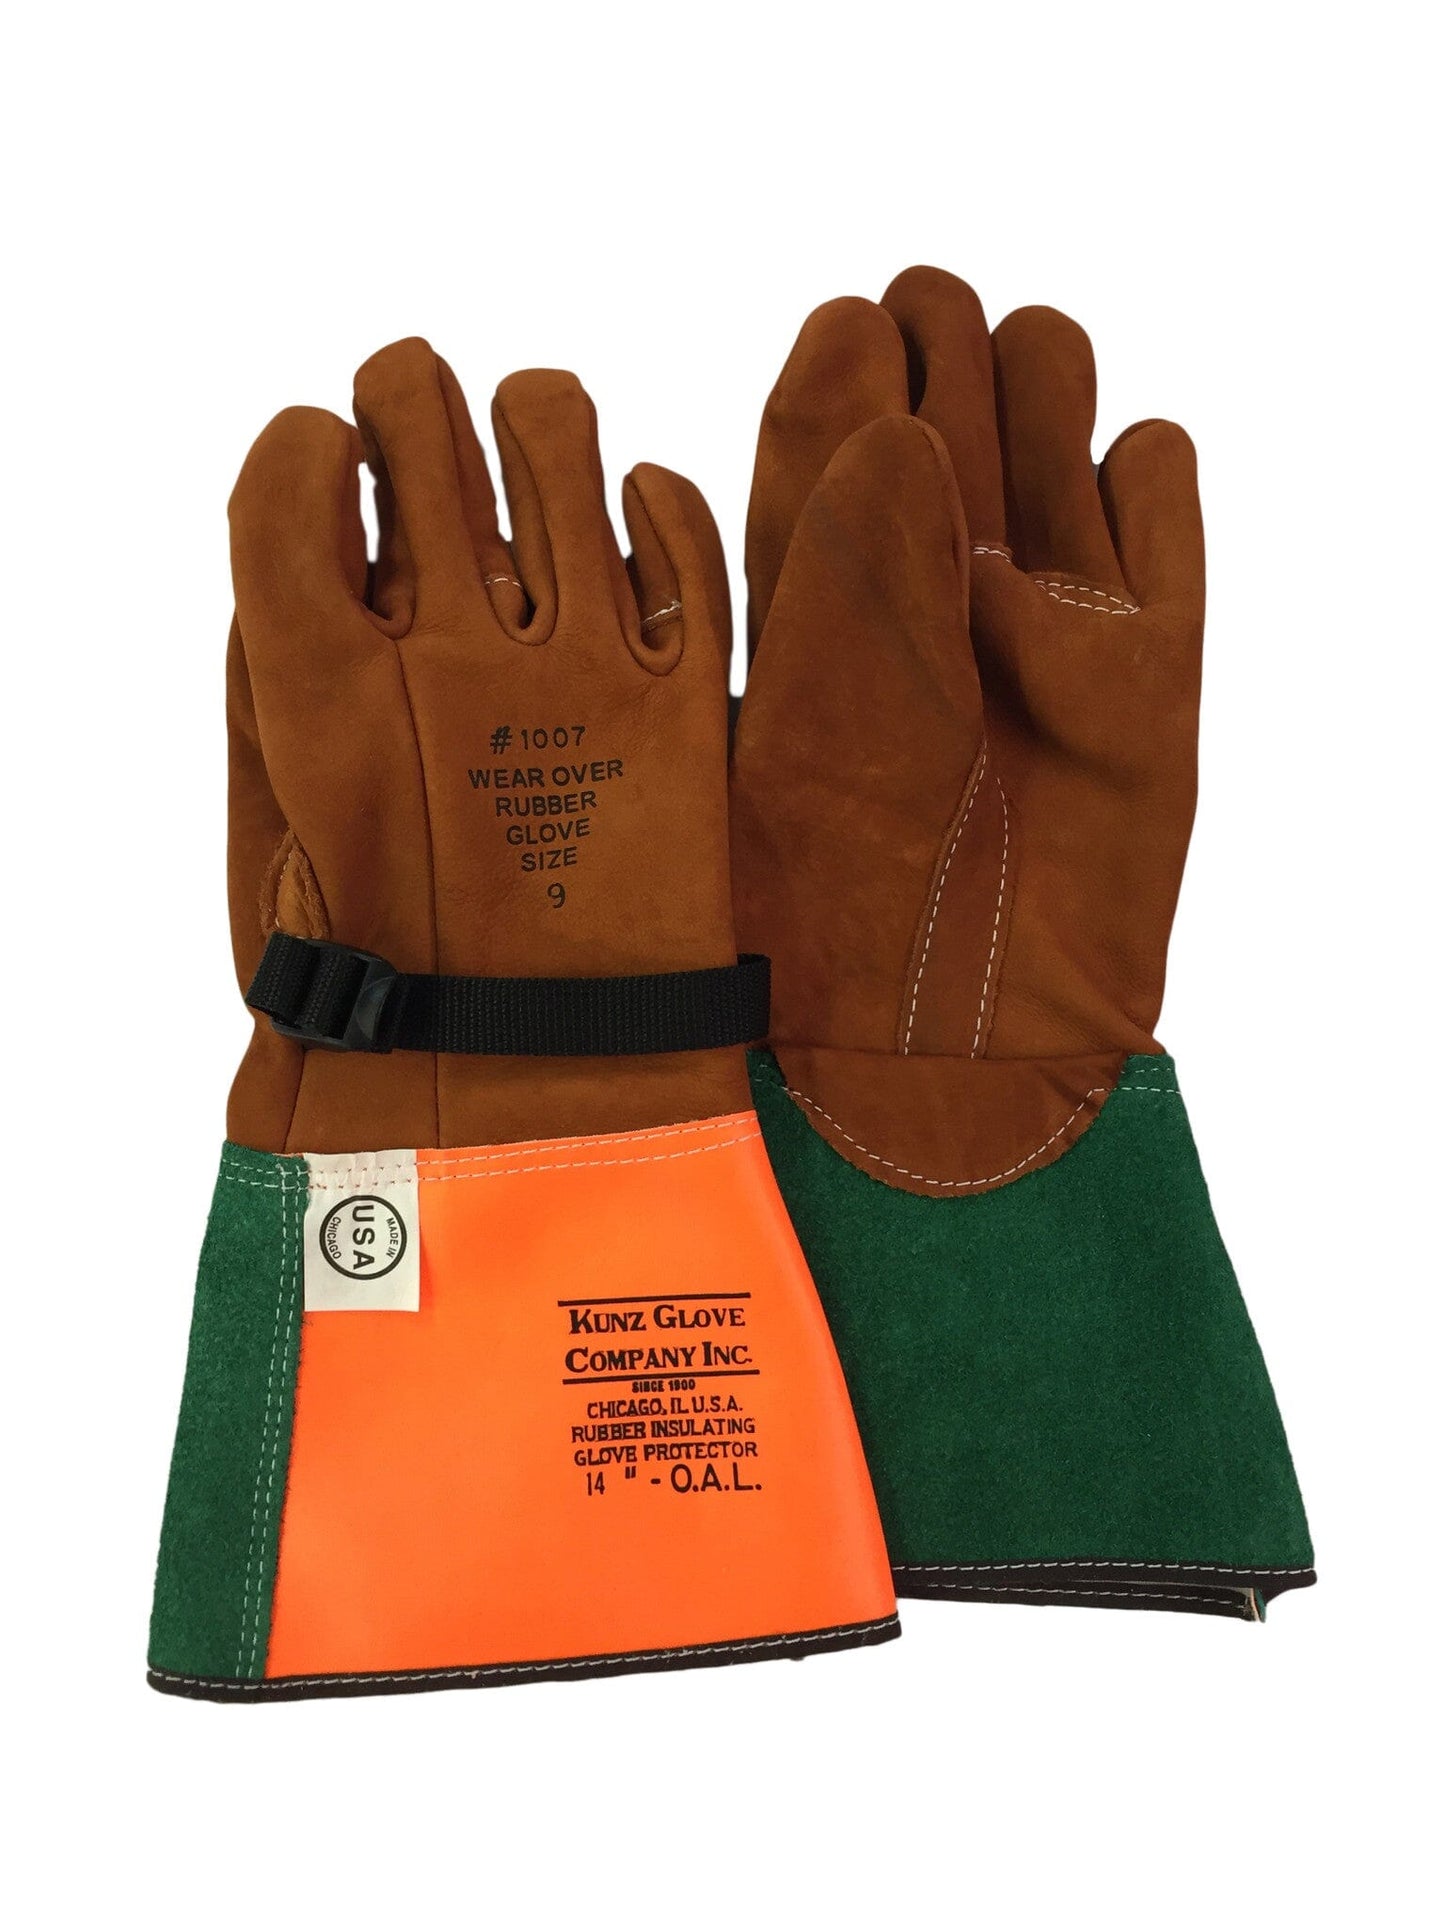 Kunz - Red Buffed Cowhide Glove Protector -1007-5BC - J.L. Matthews Co., Inc.